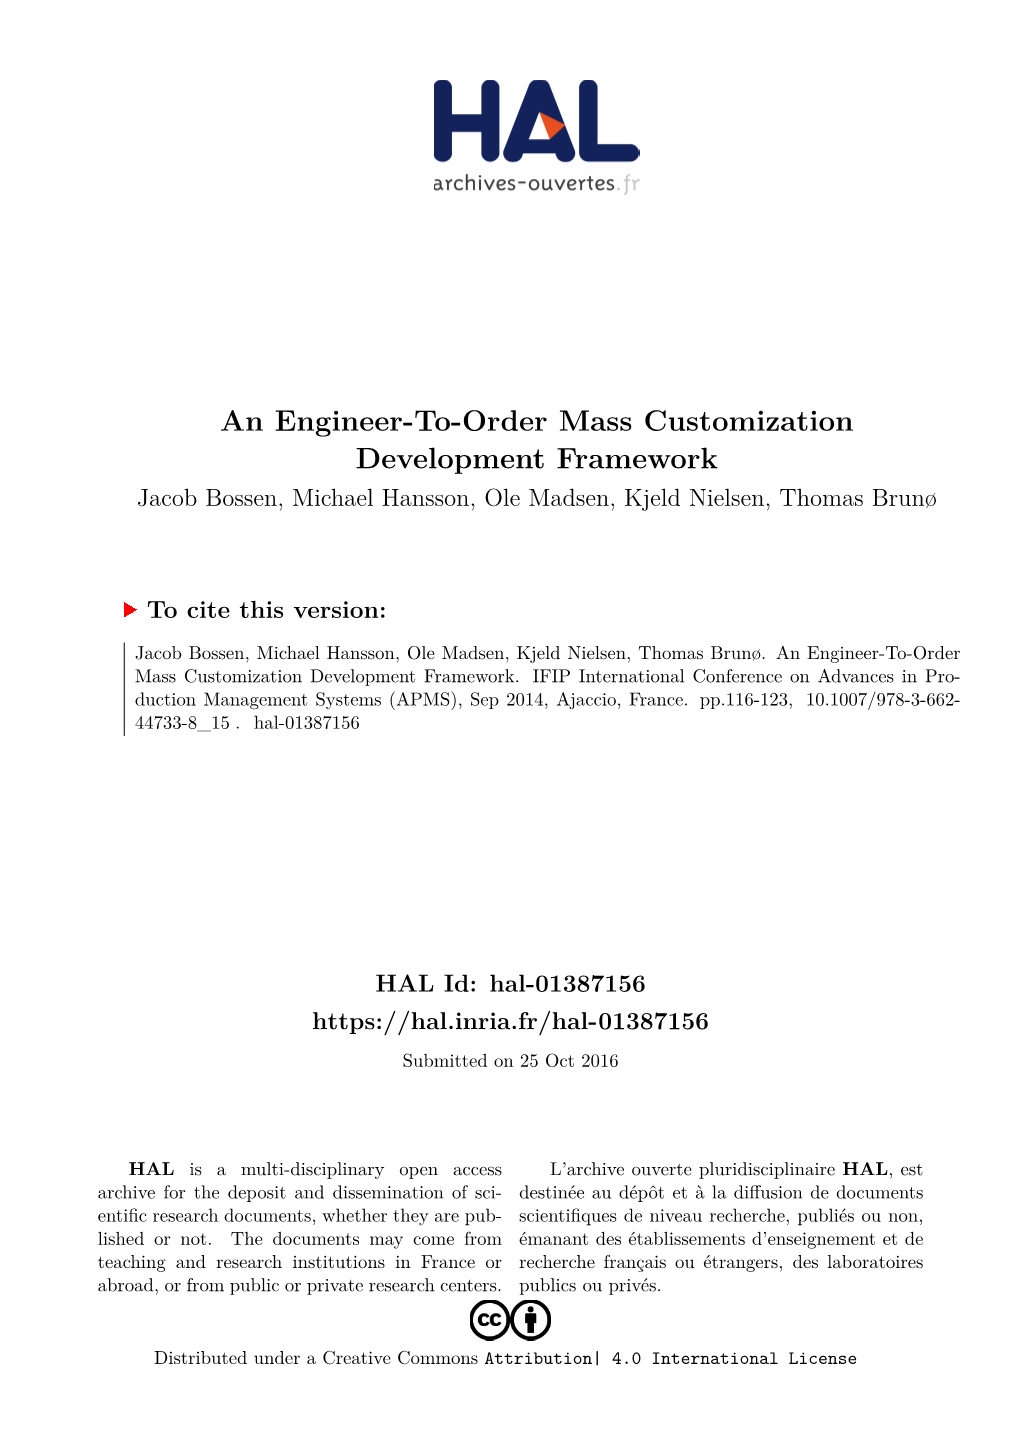 An Engineer-To-Order Mass Customization Development Framework Jacob Bossen, Michael Hansson, Ole Madsen, Kjeld Nielsen, Thomas Brunø